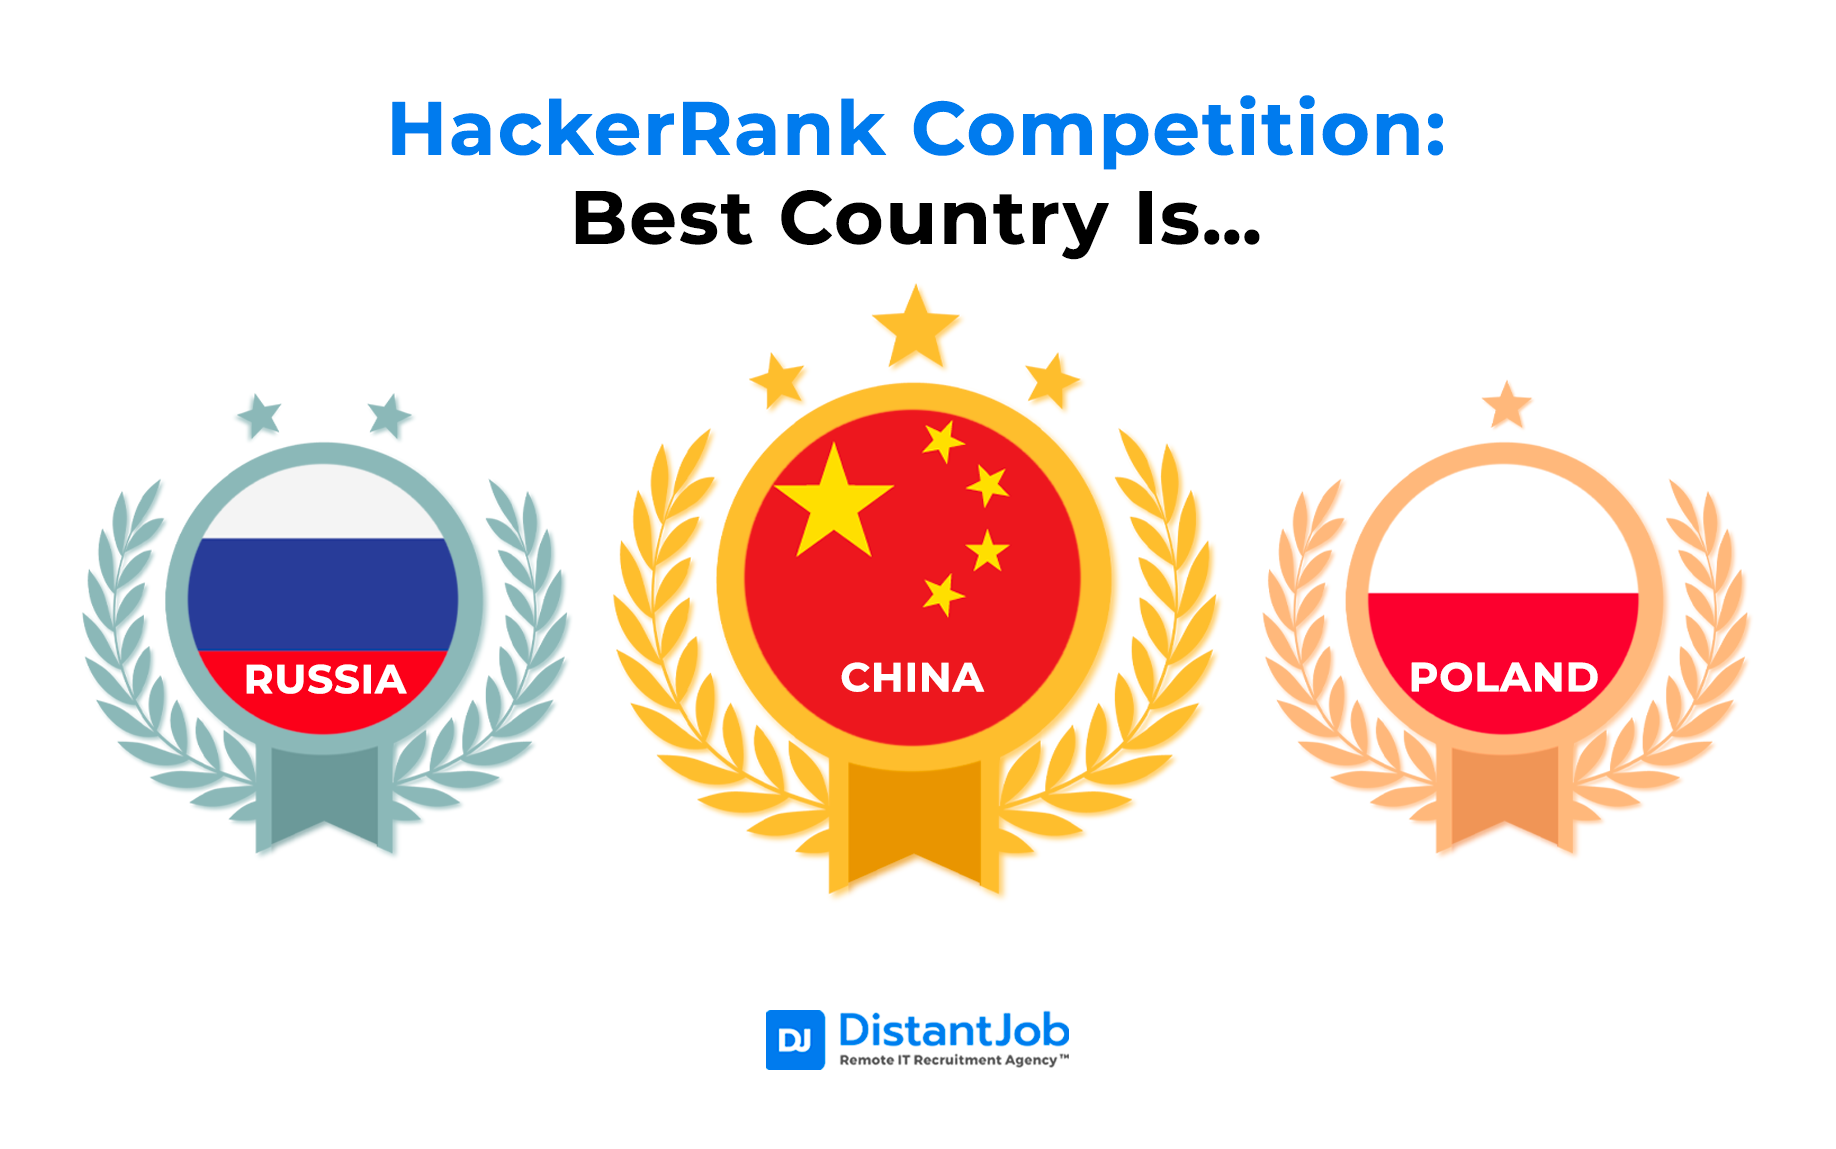 HackerRank competition